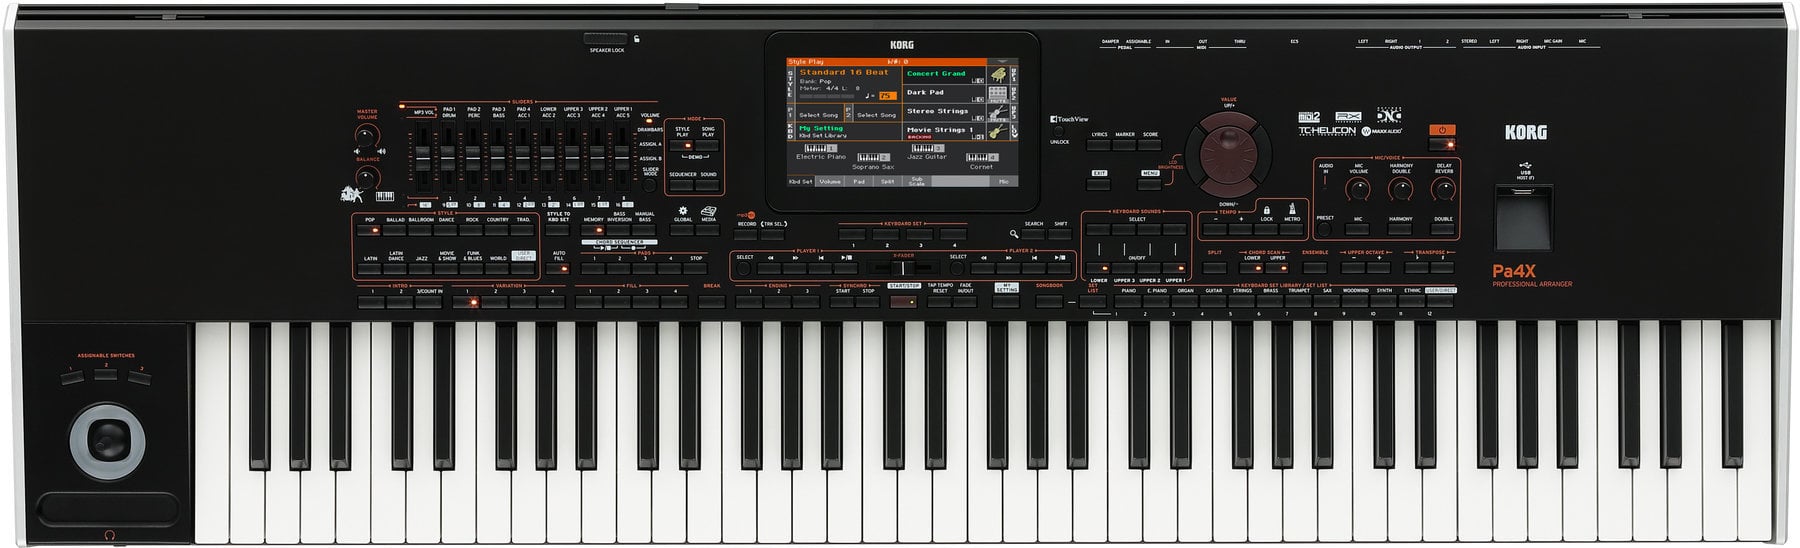 Professional Keyboard Korg Pa4X-76